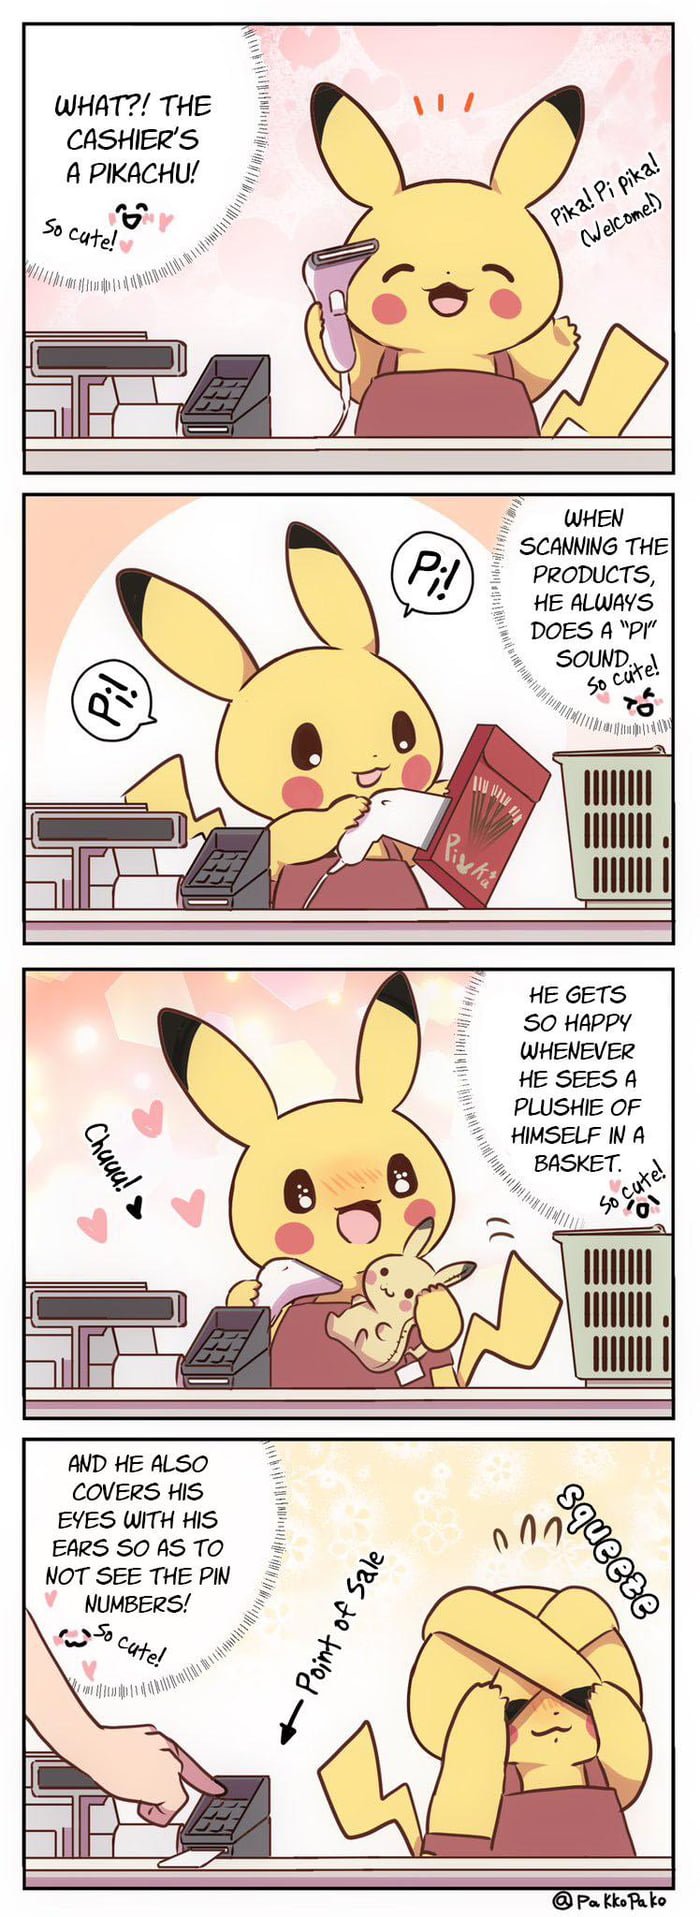 Cashier Pikachu